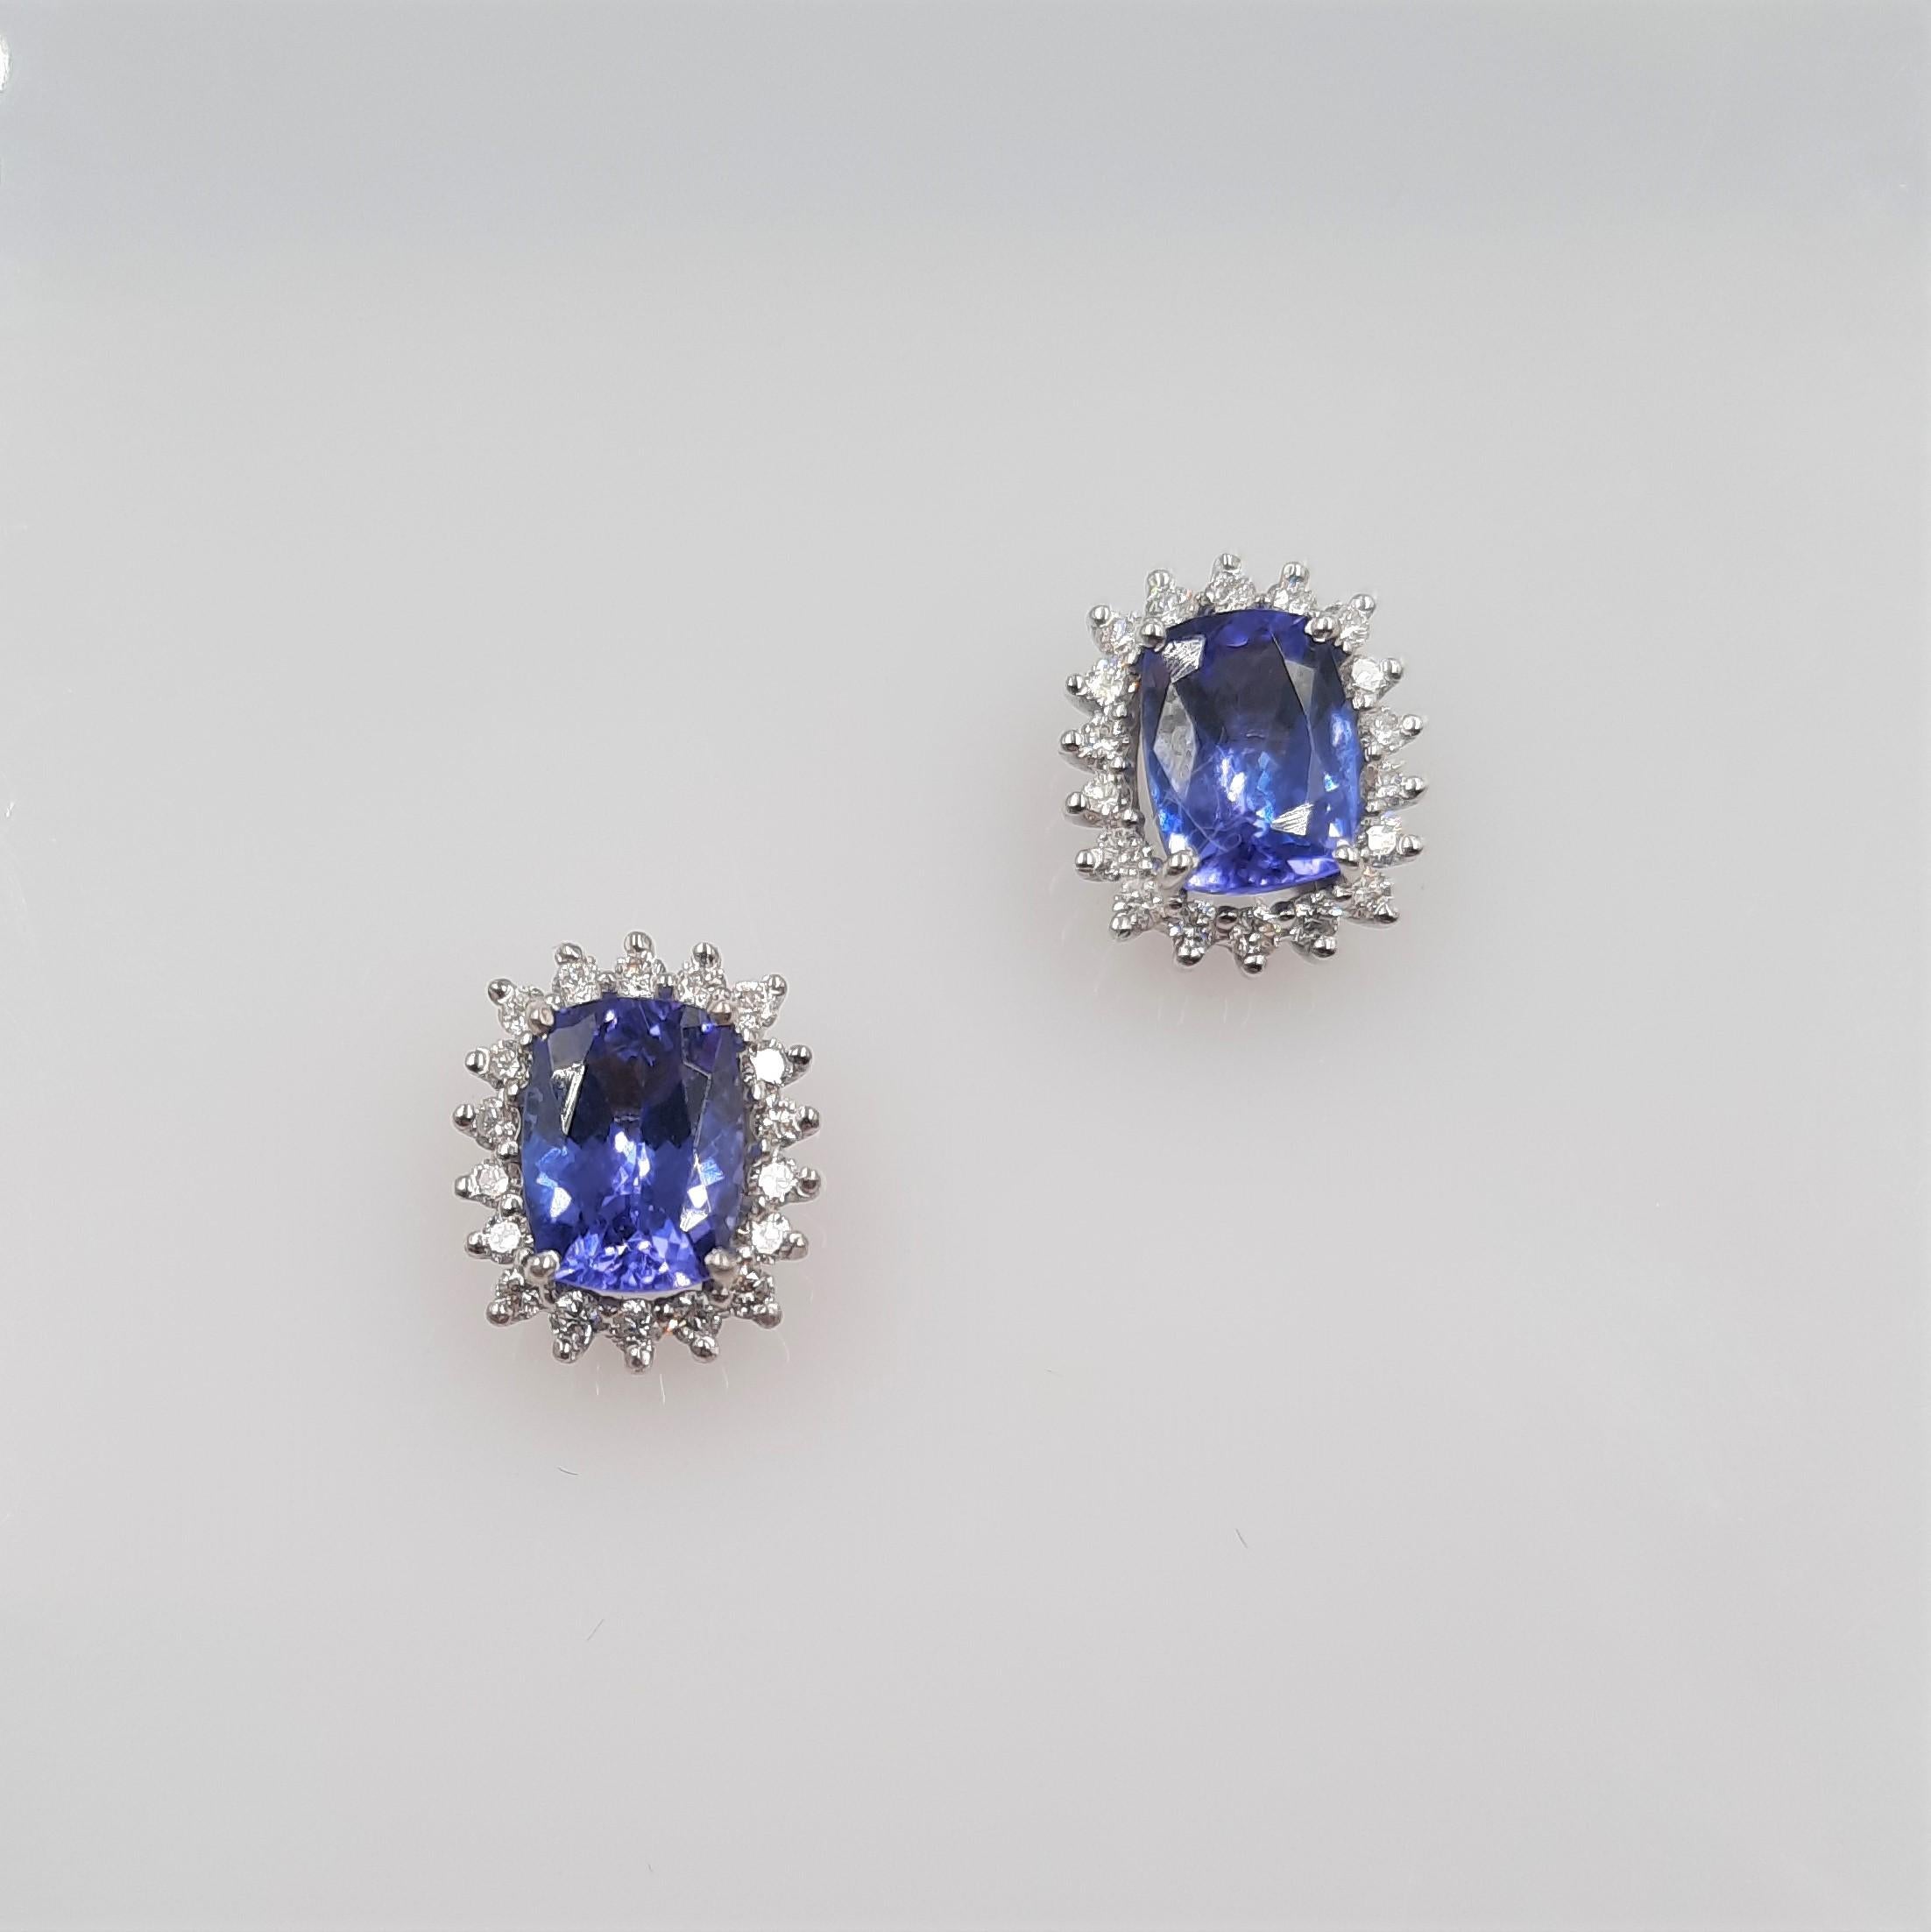 Very elegant tanzanite (2.5 carats), Brilliant cut diamond (0.41 carats) and 18 carats white gold (2.7 grams) stud earrings.